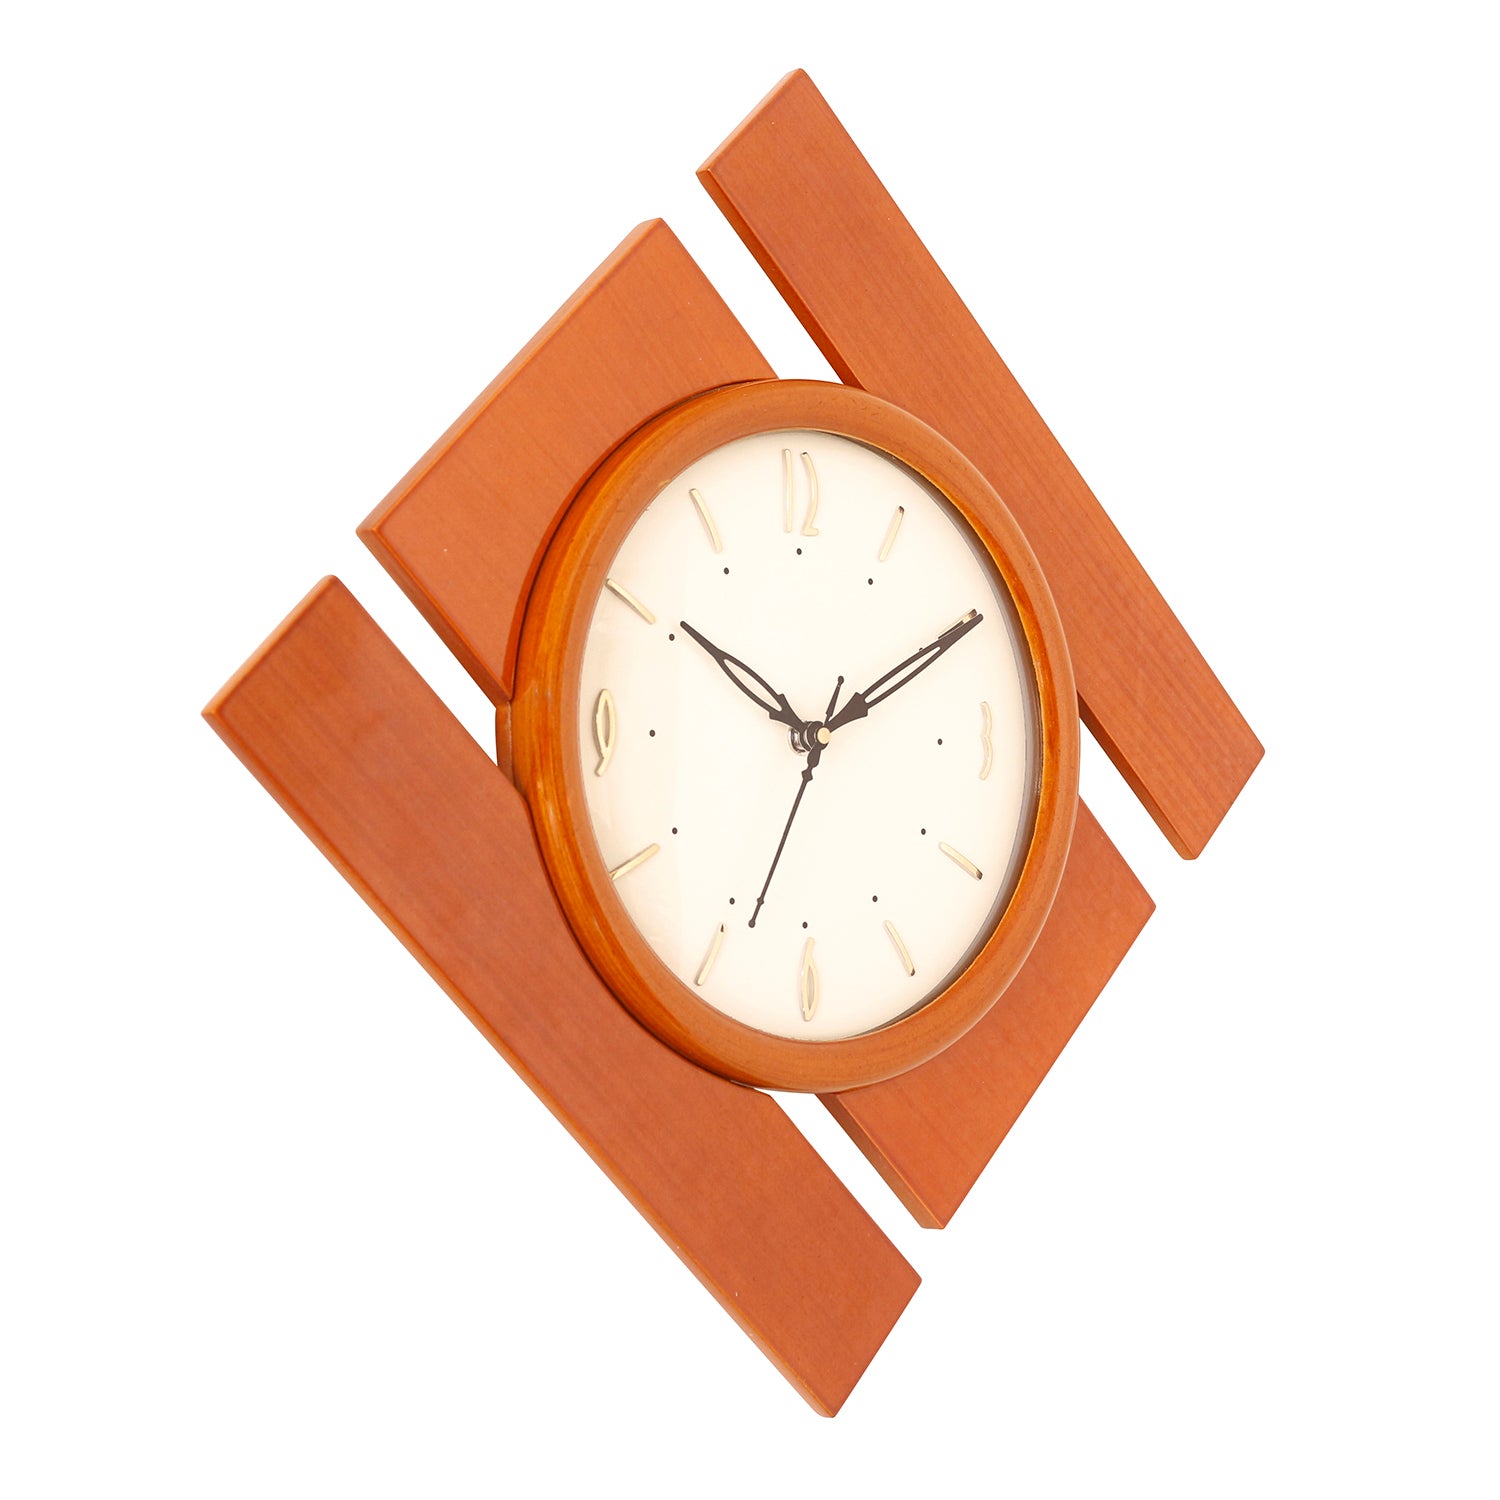 Brown kite wooden analog wall clock(40.5 cm x 40.5 cm) 3